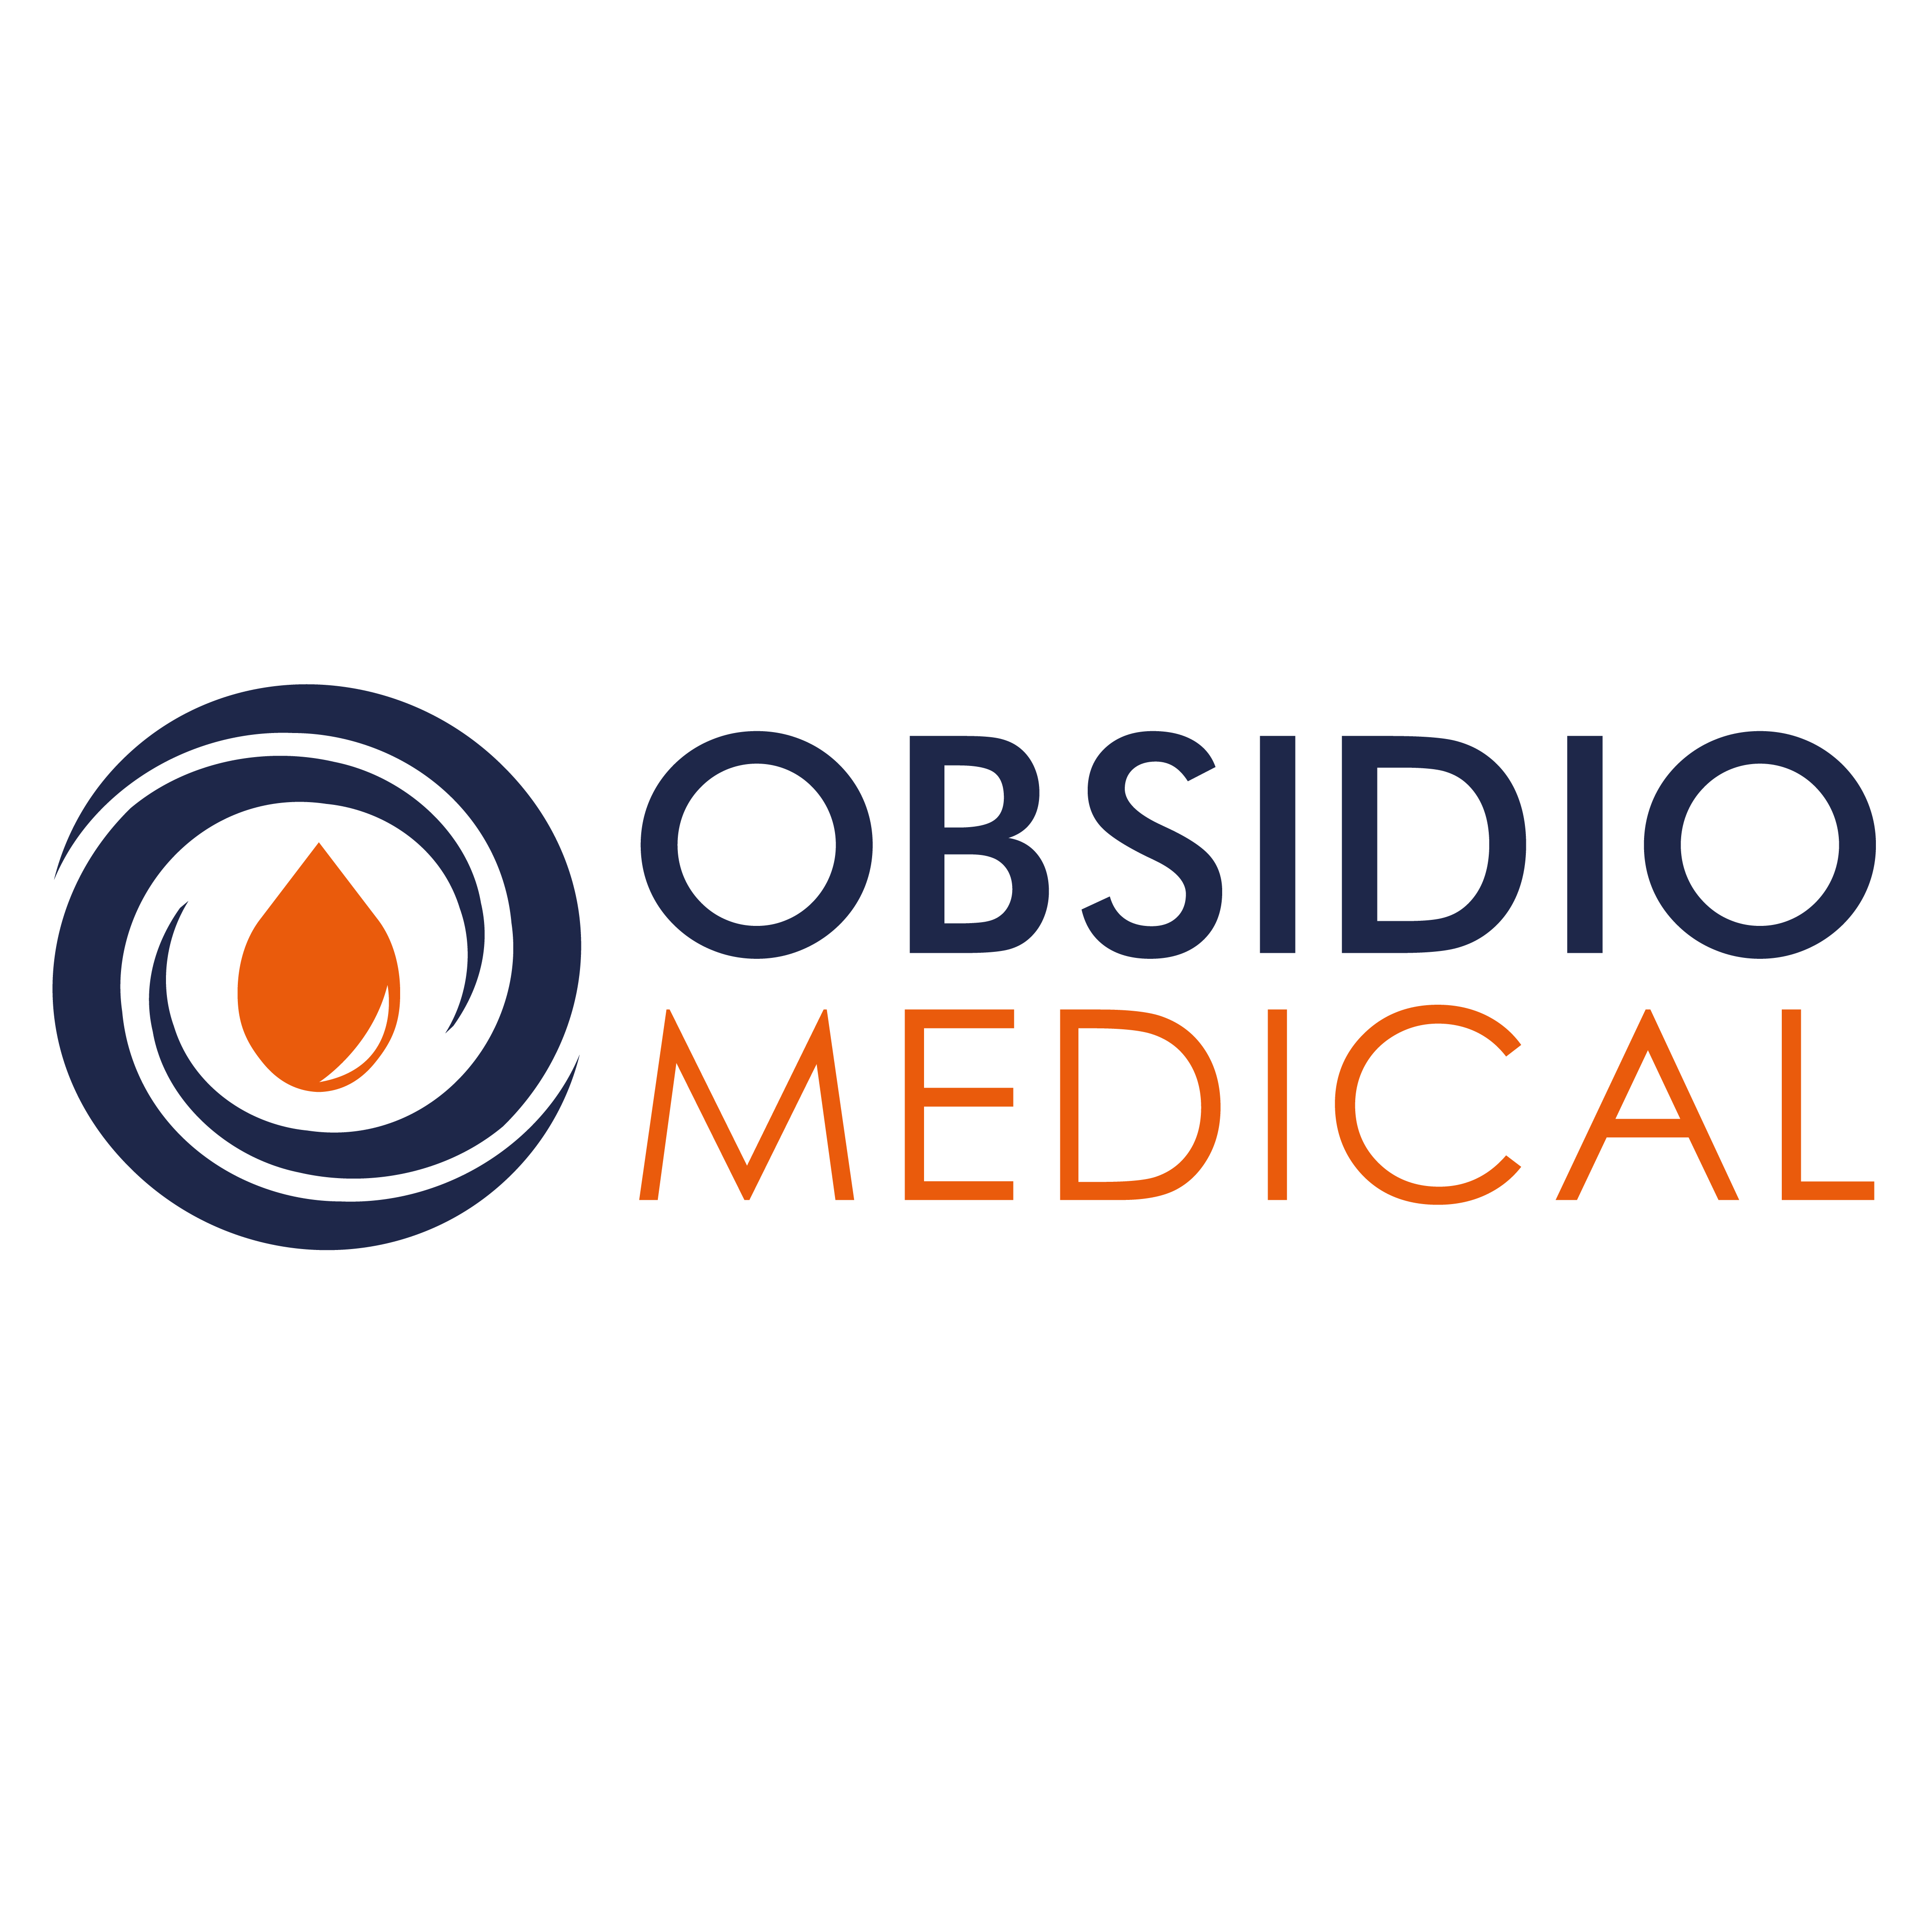 Obsidio medical logo png